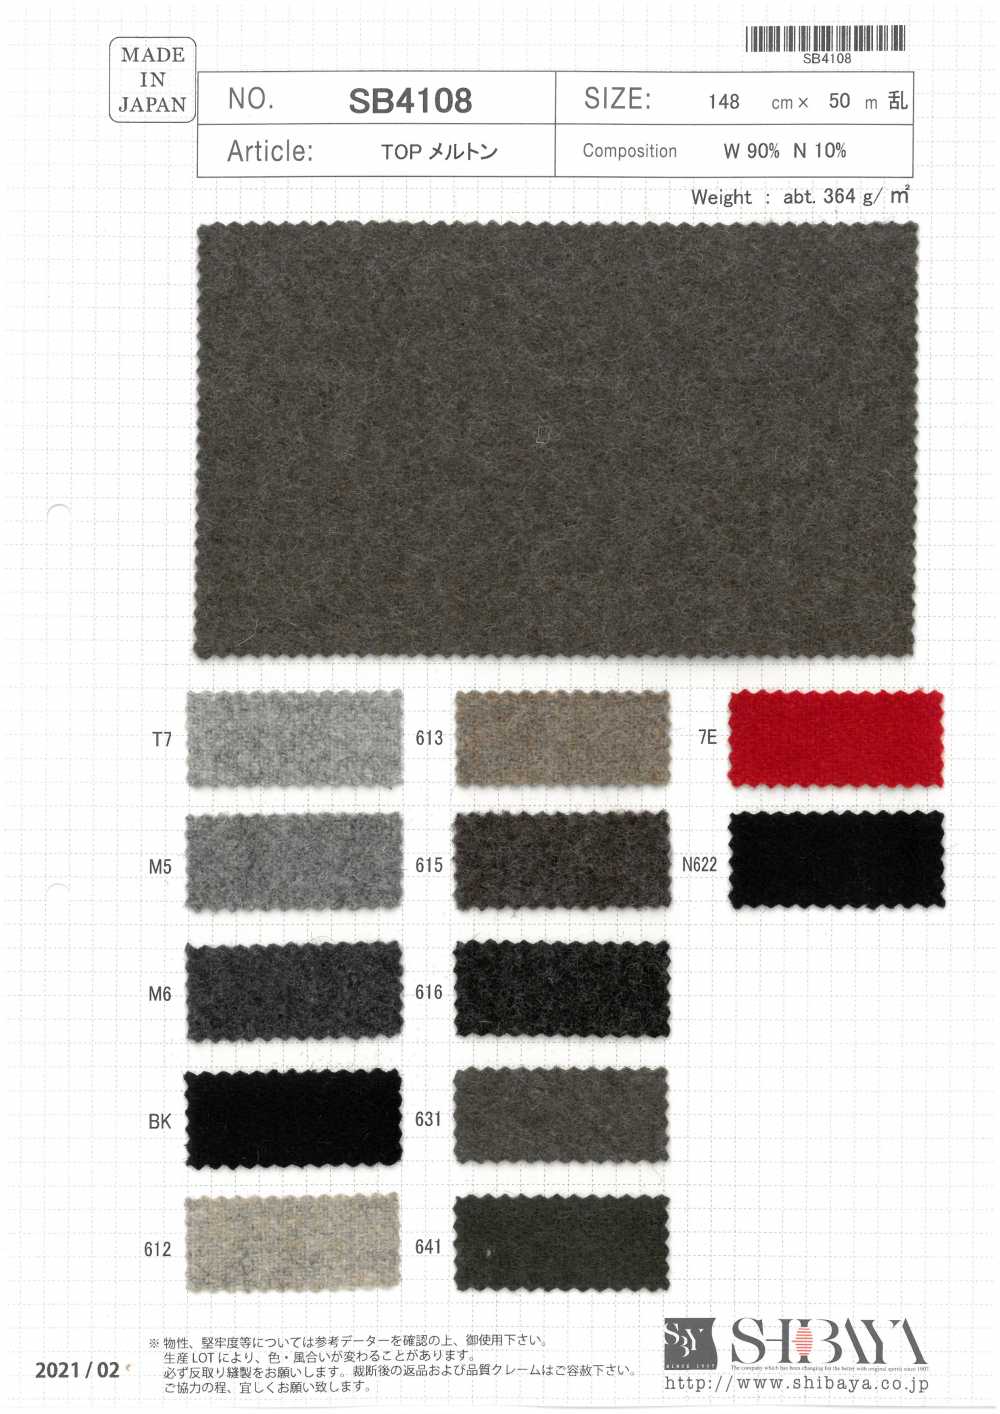 SB4108 TOP Melton[Textile / Fabric] SHIBAYA